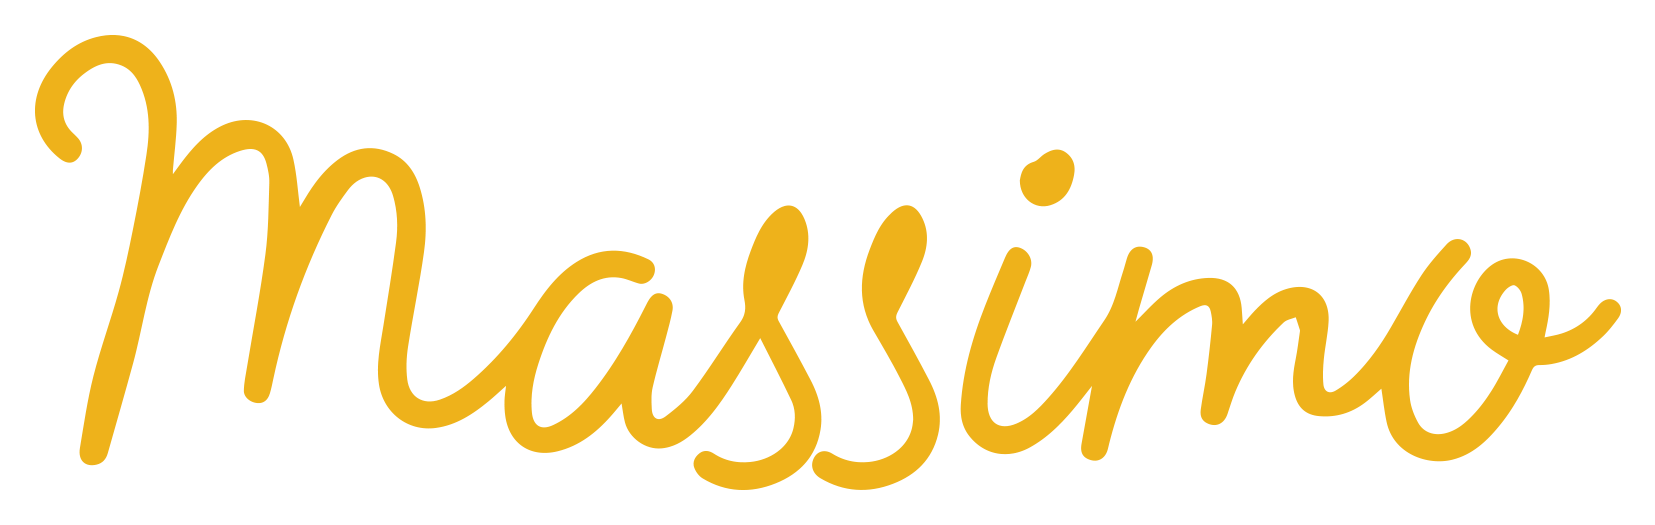 Italian restaurant logo, branding, advertisement, signage and web design